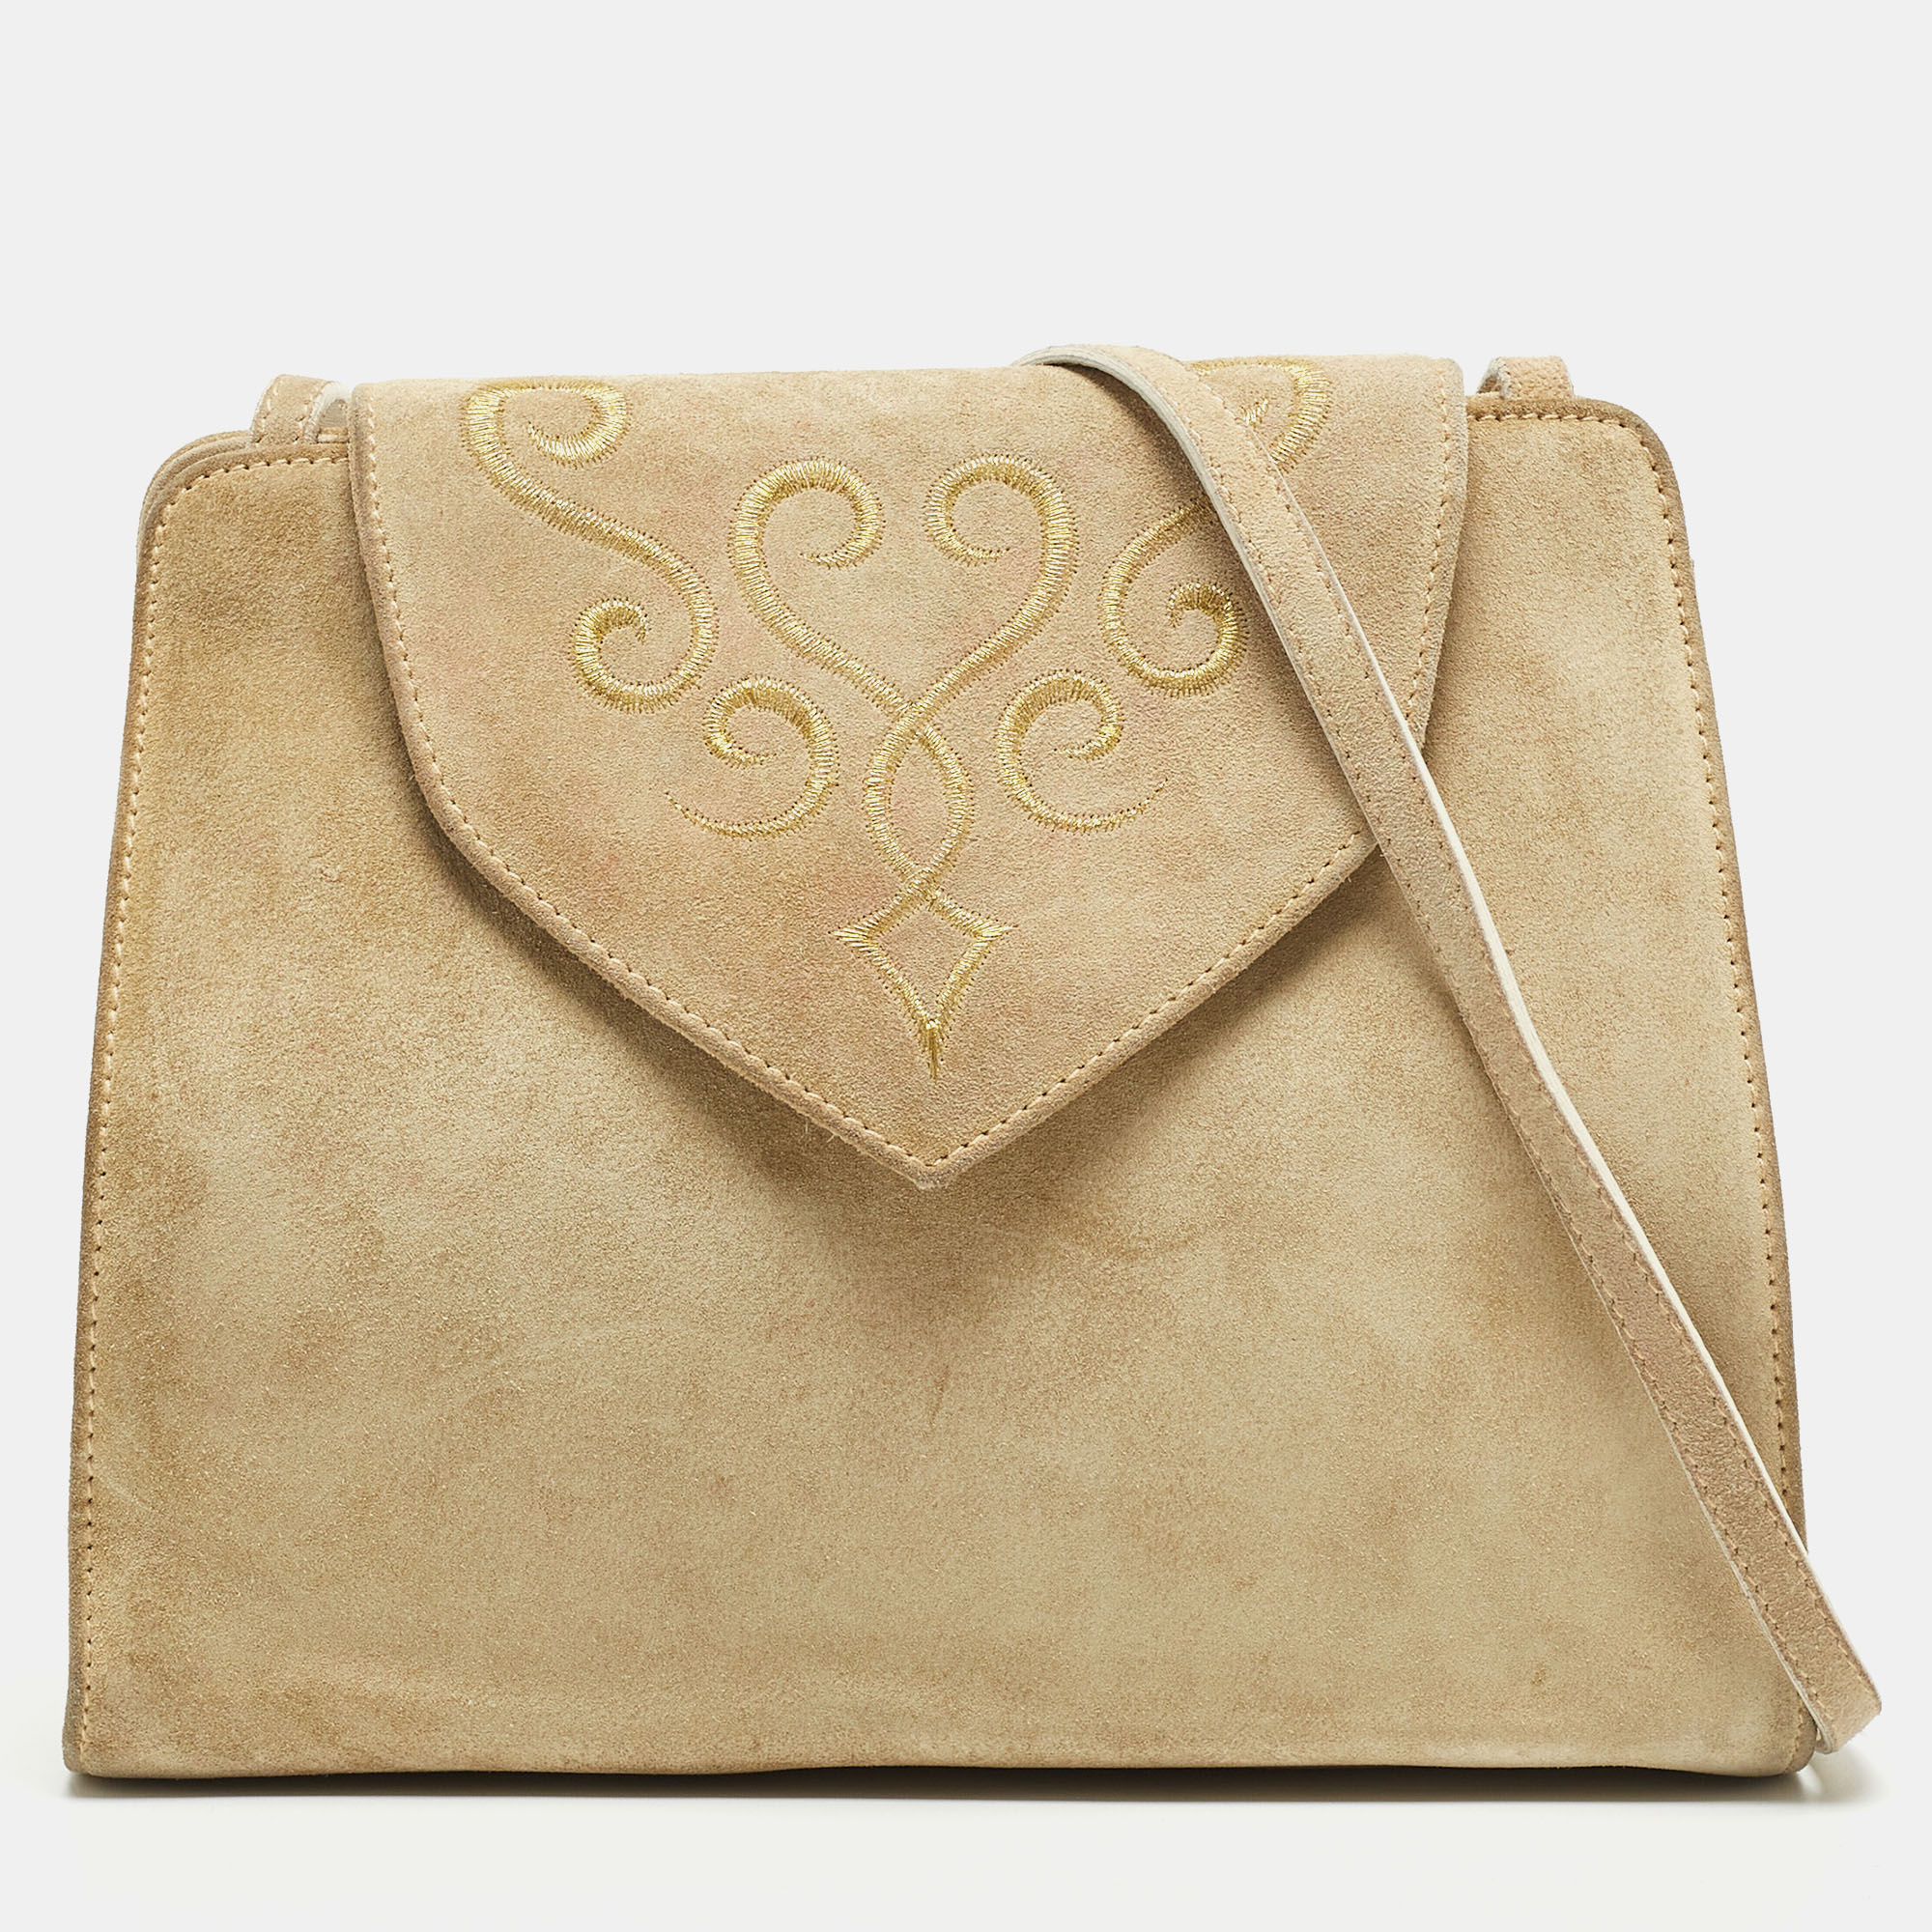 Salvatore Ferragamo Cream Suede And Leather Embroidered Flap Crossbody Bag